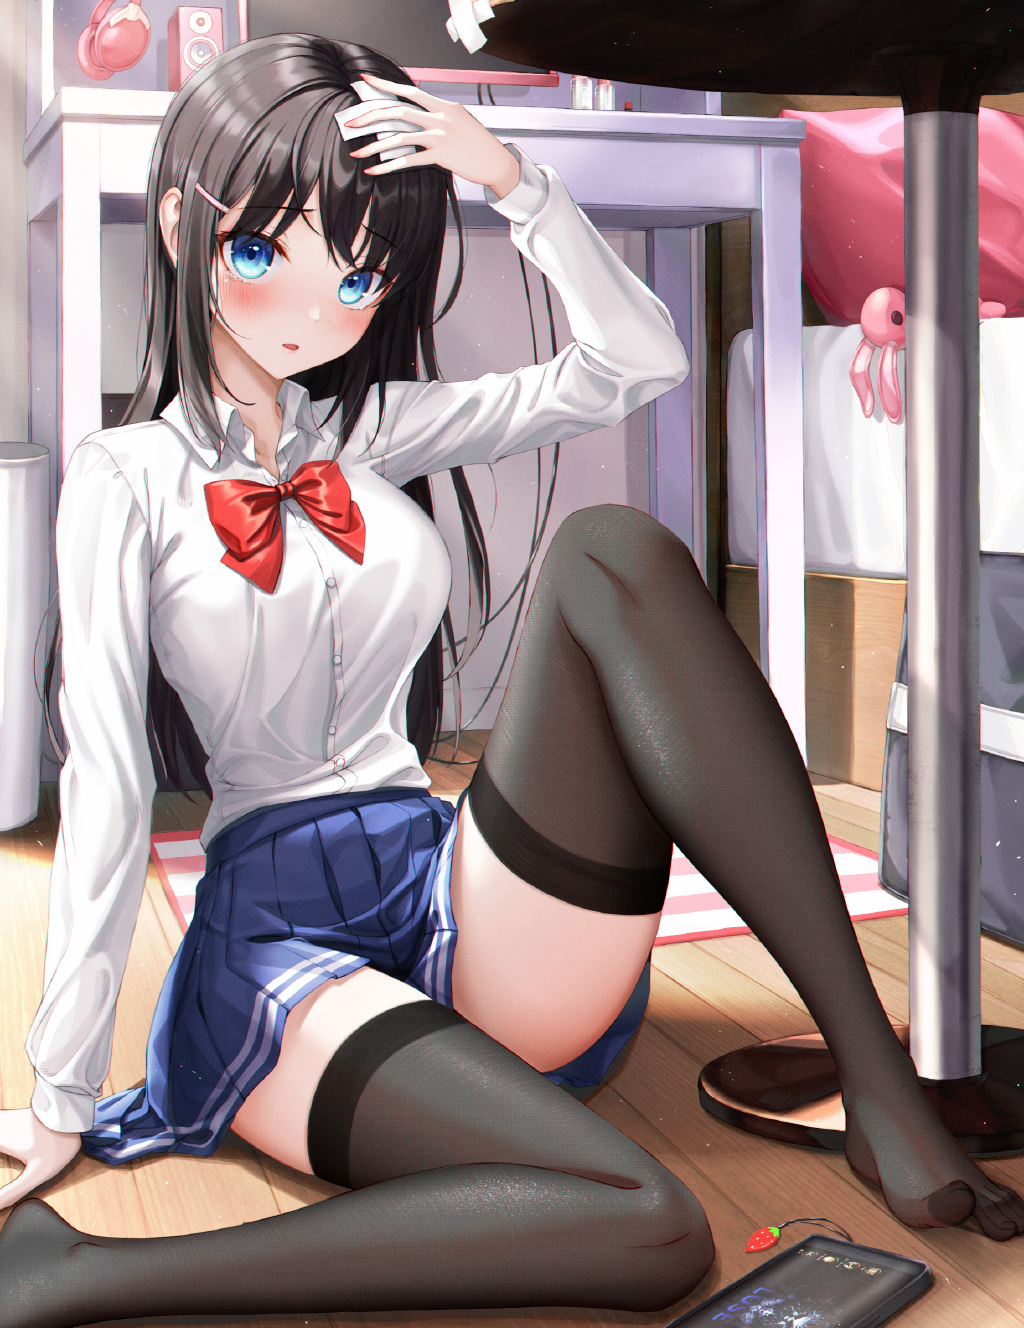 Anime 1024x1328 legs black stockings anime anime girls Eichi artwork dark hair blue eyes school uniform thigh-highs miniskirt